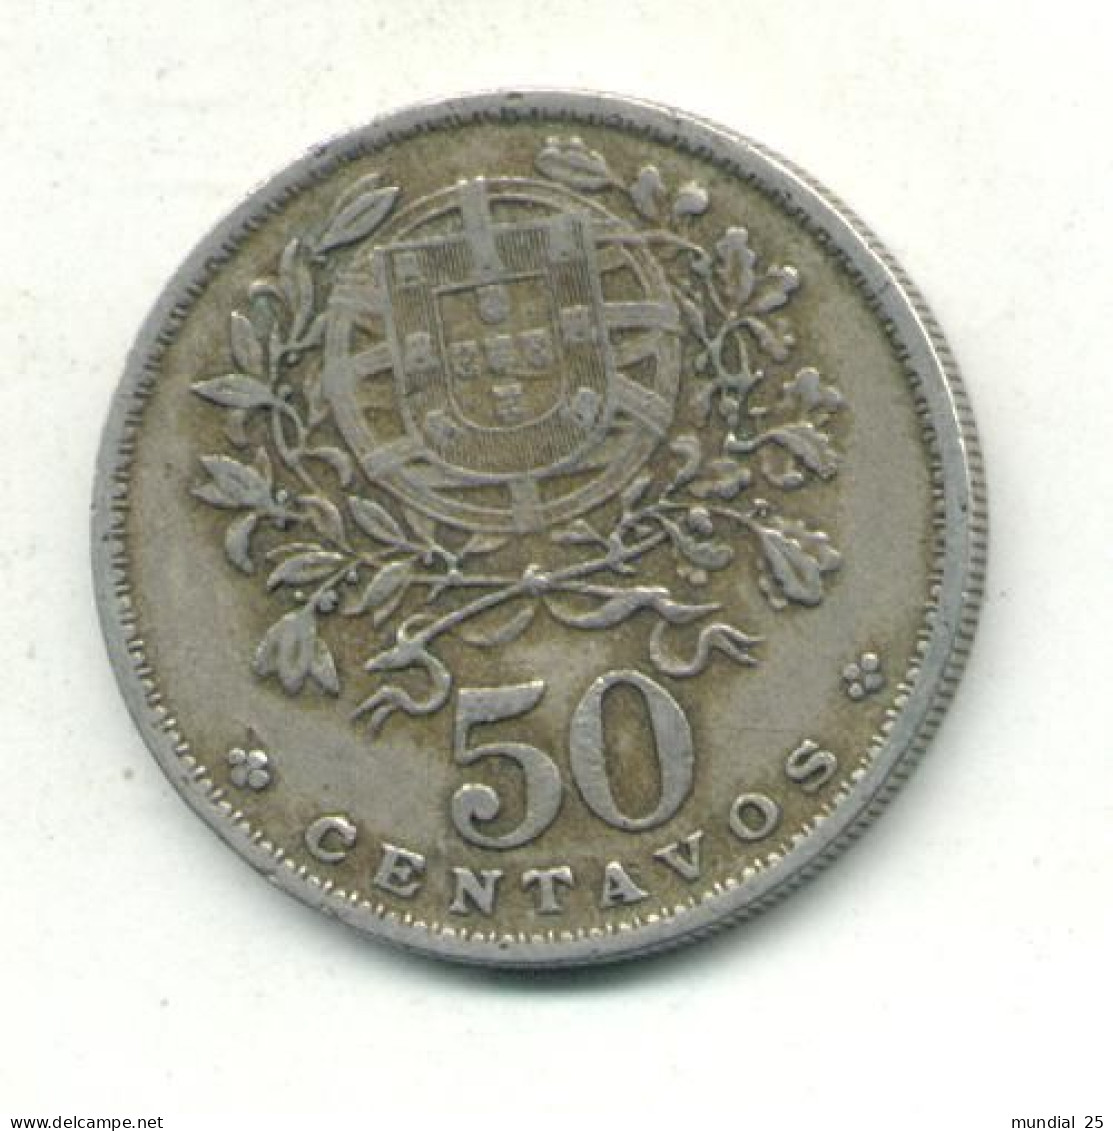 PORTUGAL 50 CENTAVOS 1959 - Portugal